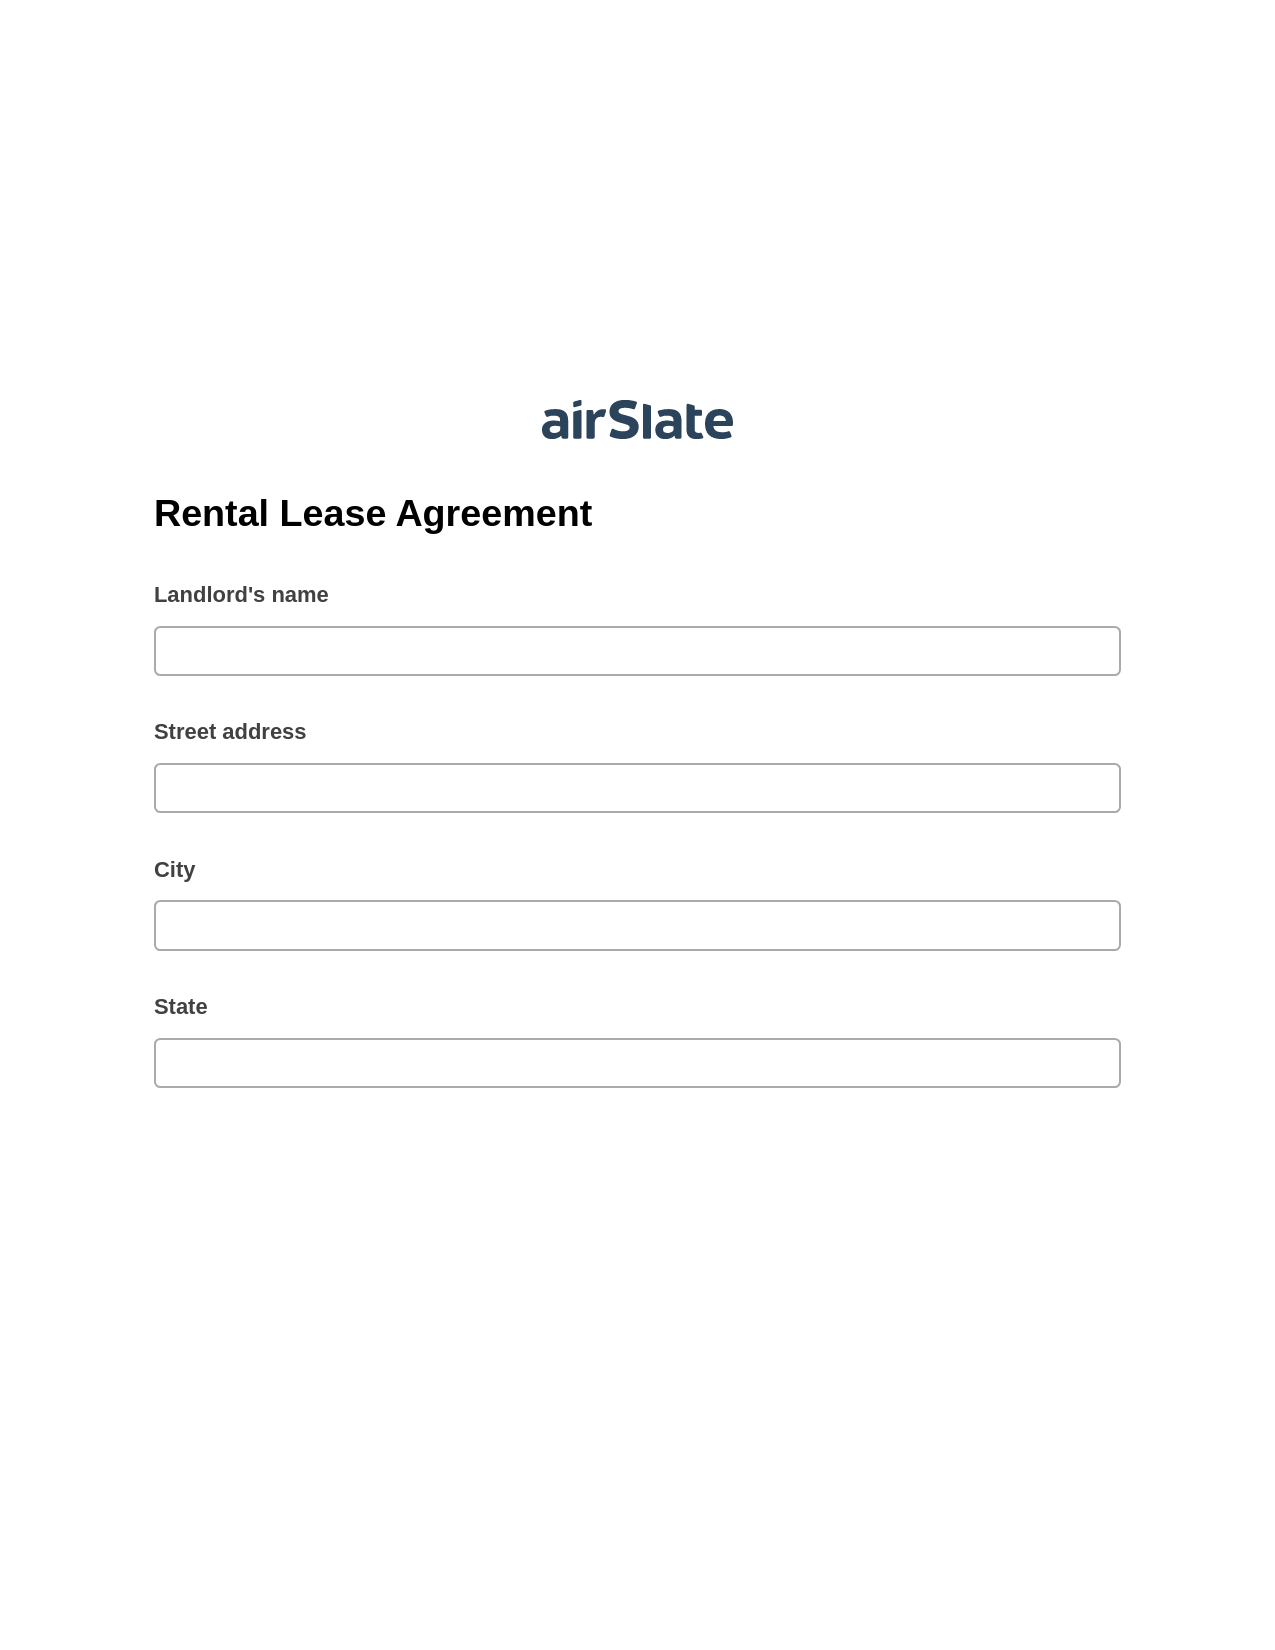 Multirole Rental Lease Agreement Pre-fill from Google Sheet Dropdown Options Bot, Create slate addon, Export to Smartsheet